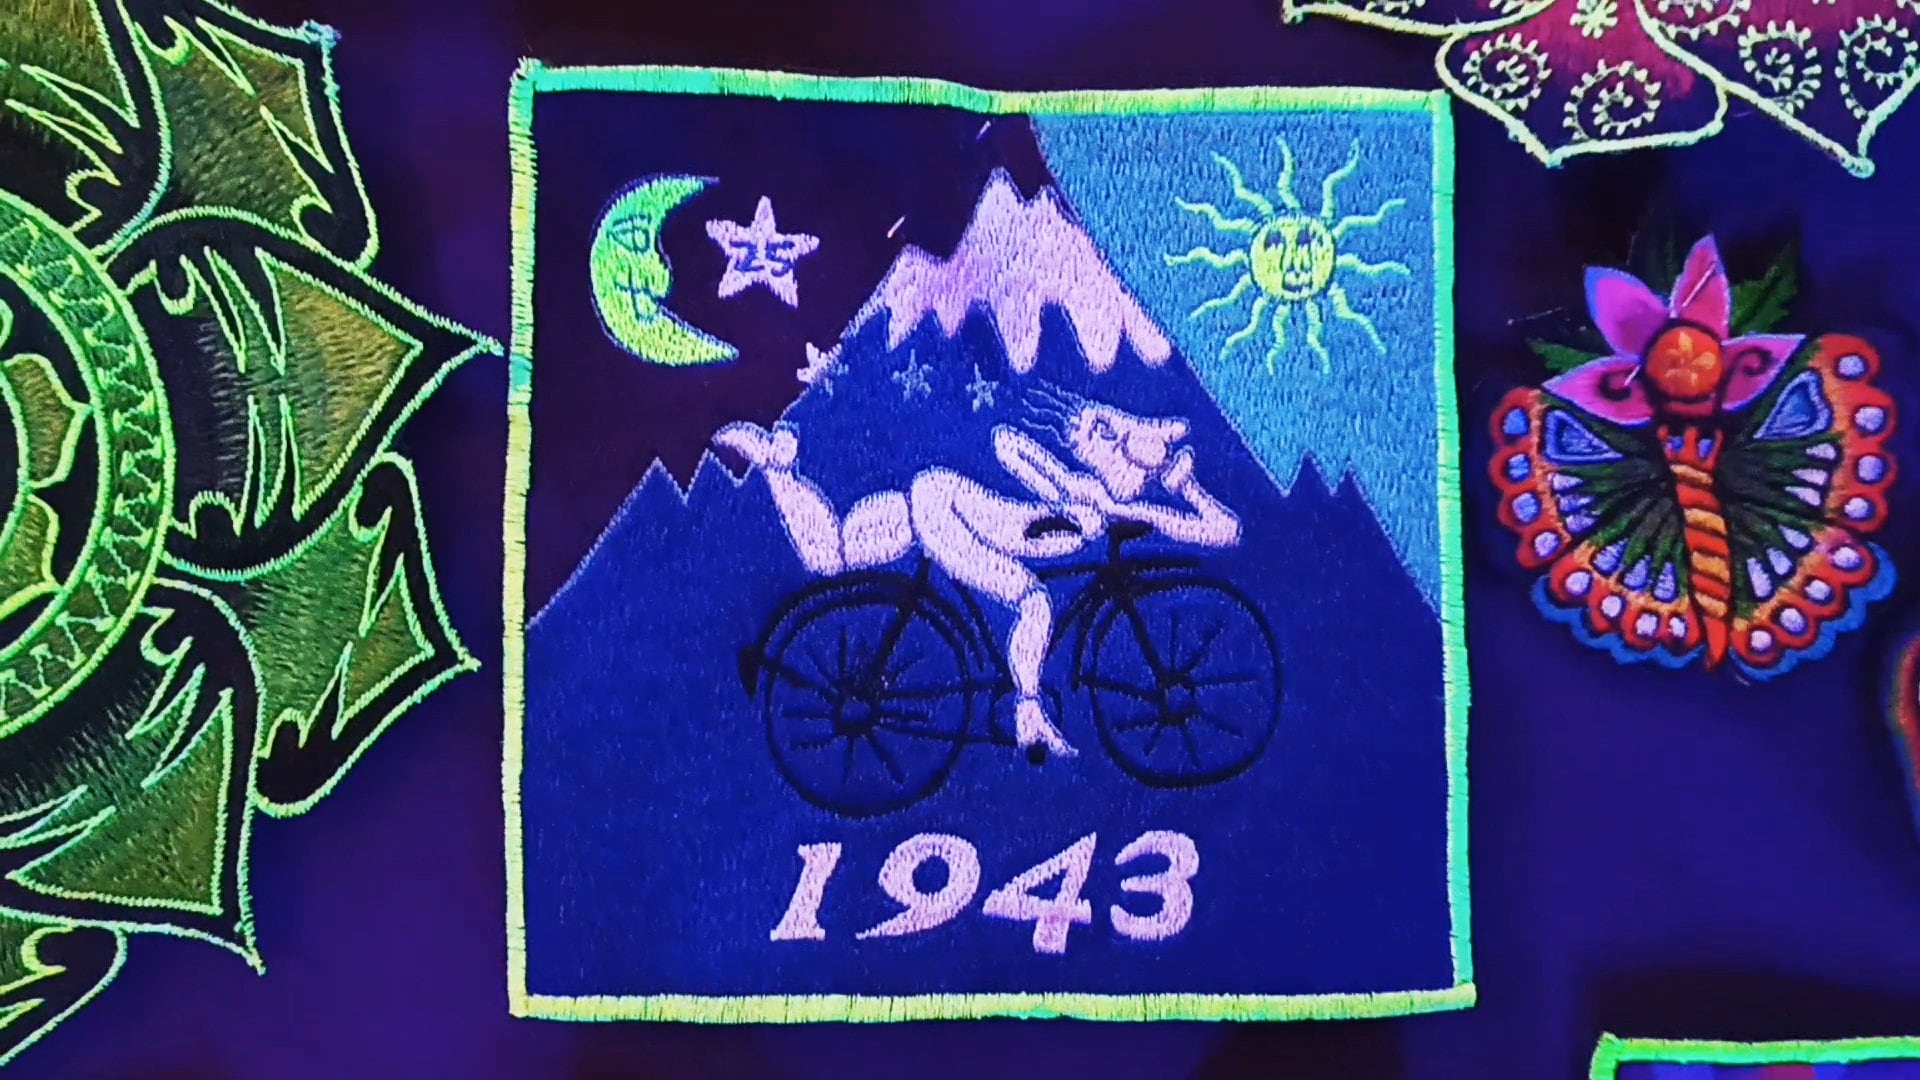 Blue Bicycle Day blacklight LSD Cult Patch Albert Hofmann 1943 Psychedelic Sunshine Acid Trip Hippie Visionary Drug Cosmic Healing Medicine